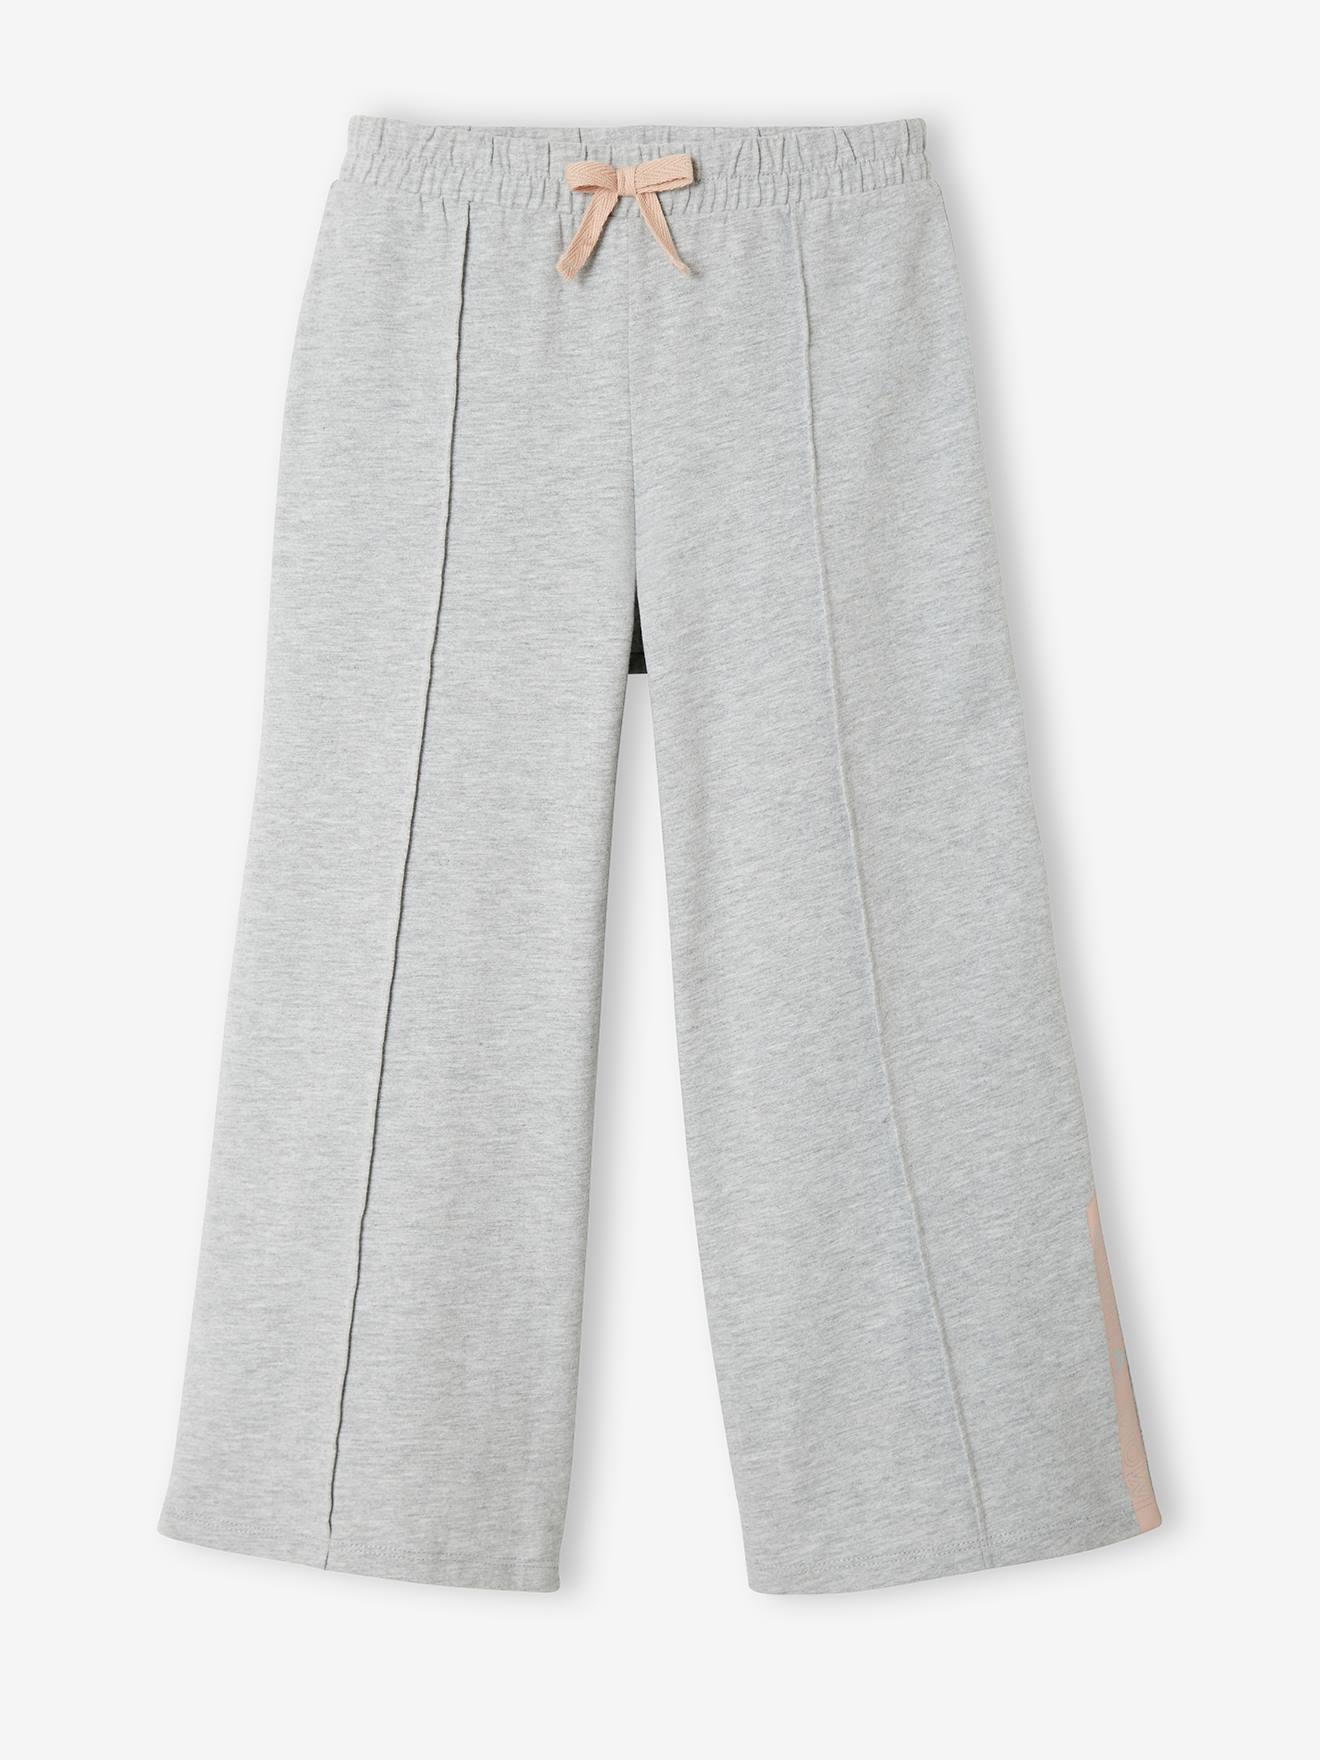 Pantalon Yoga sport fille gris